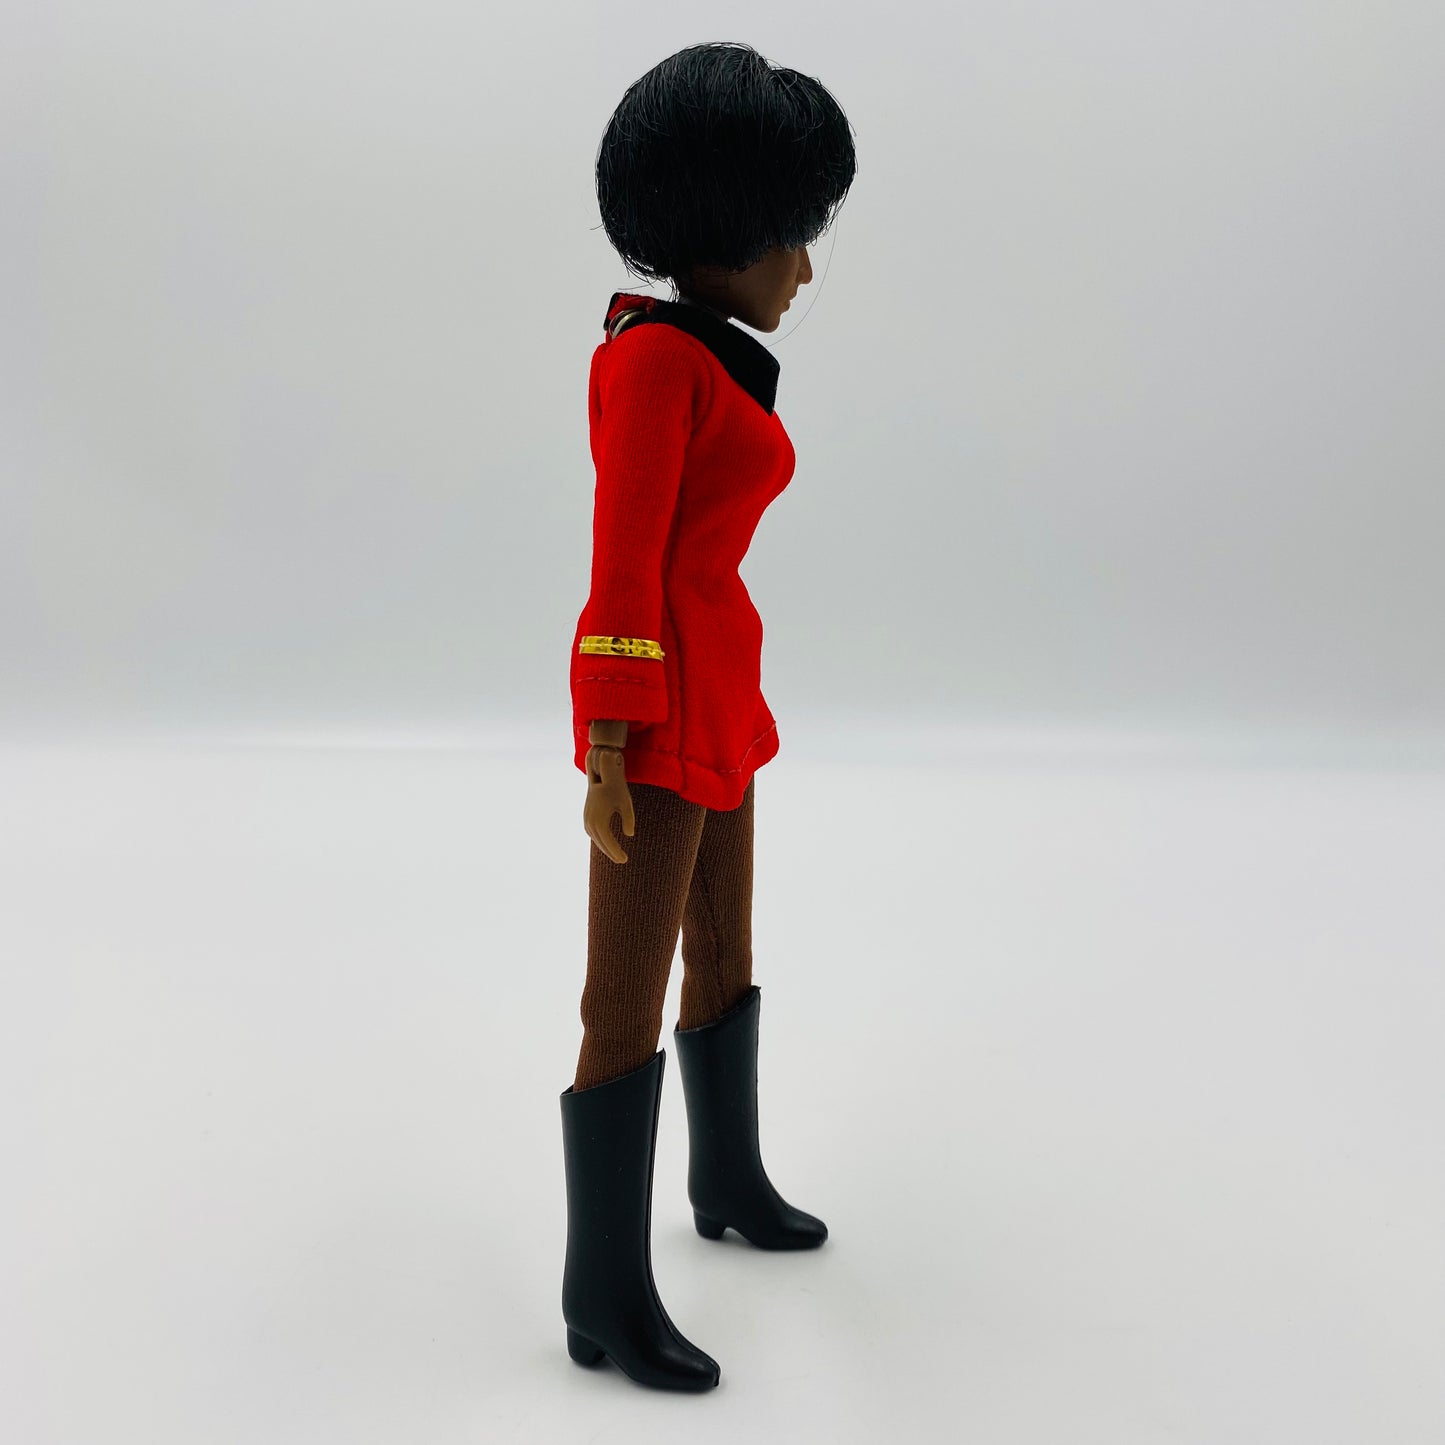 Star Trek Lt. Uhura loose 8” action figure (1974) Mego